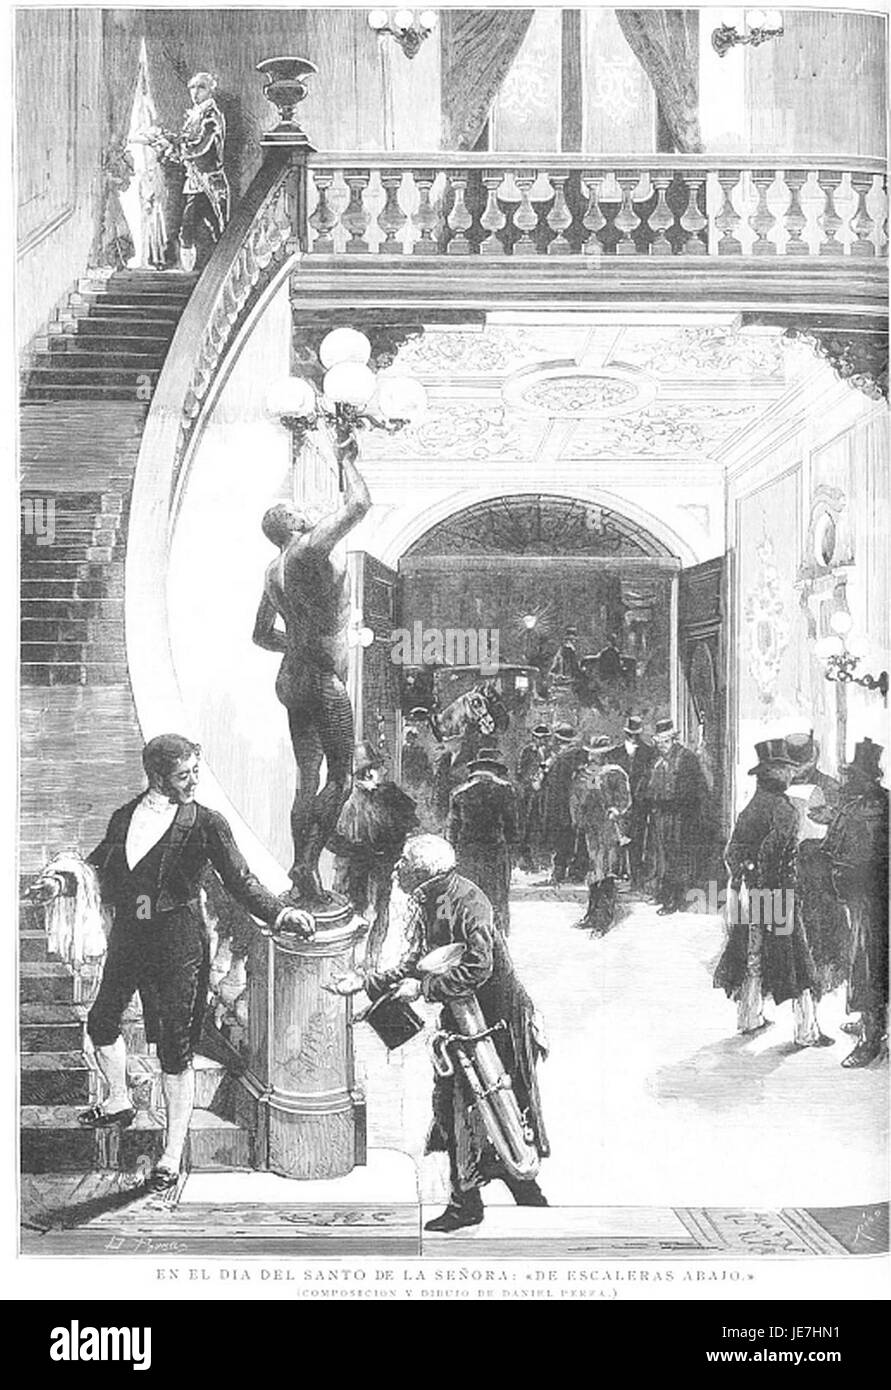 Daniel-Perea-escaleras-abajo-1884 Stock Photo